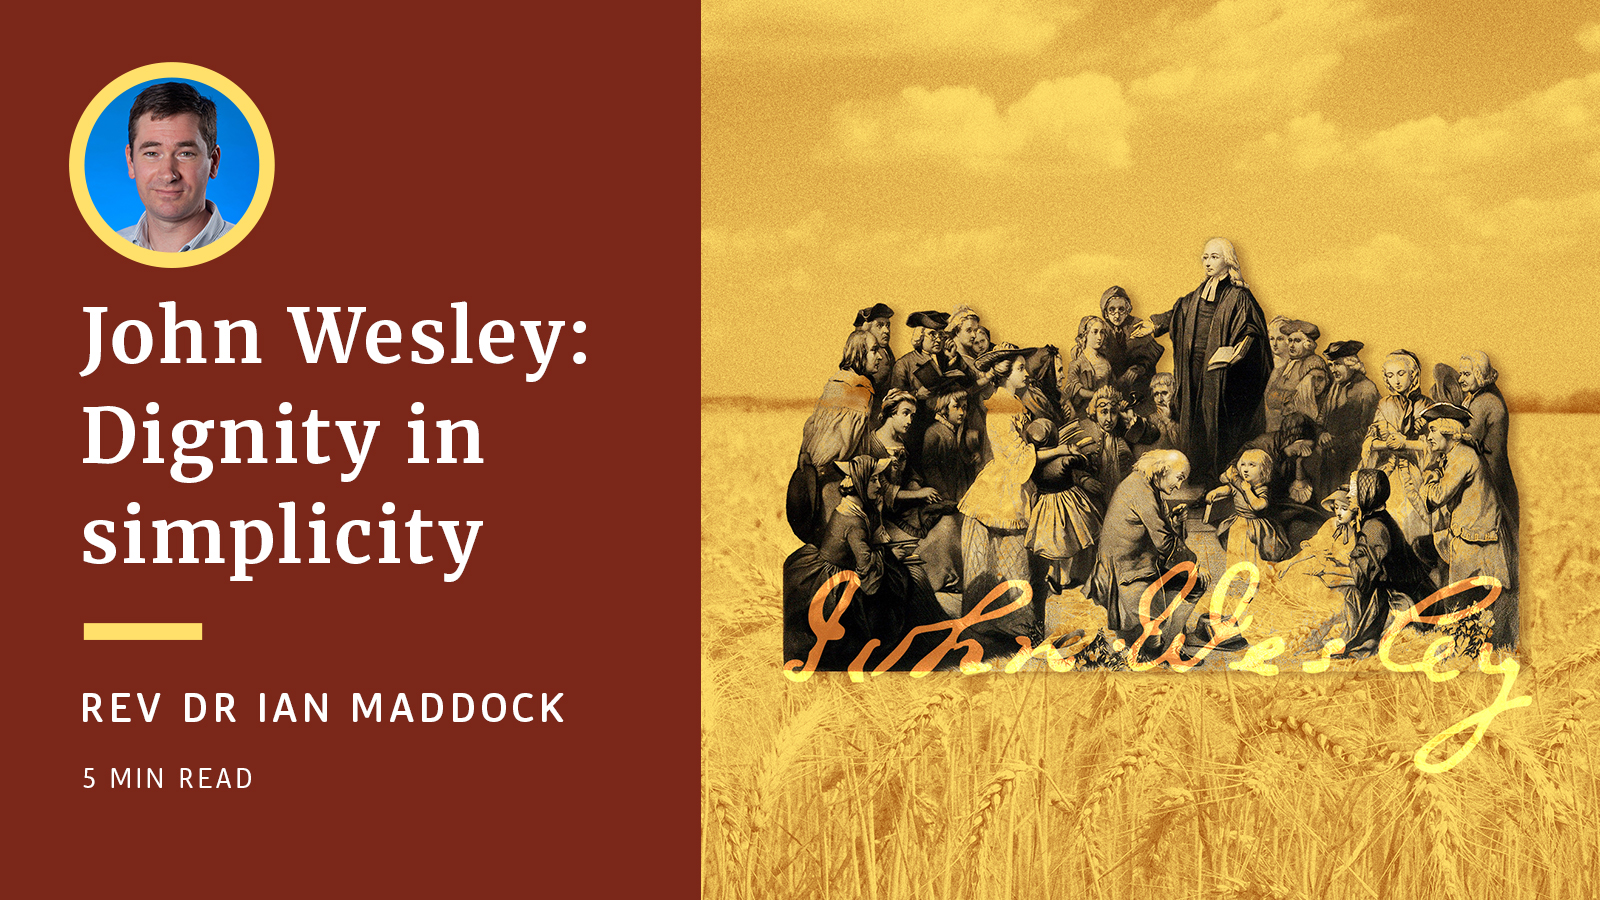 Image - John Wesley: Dignity in simplicity